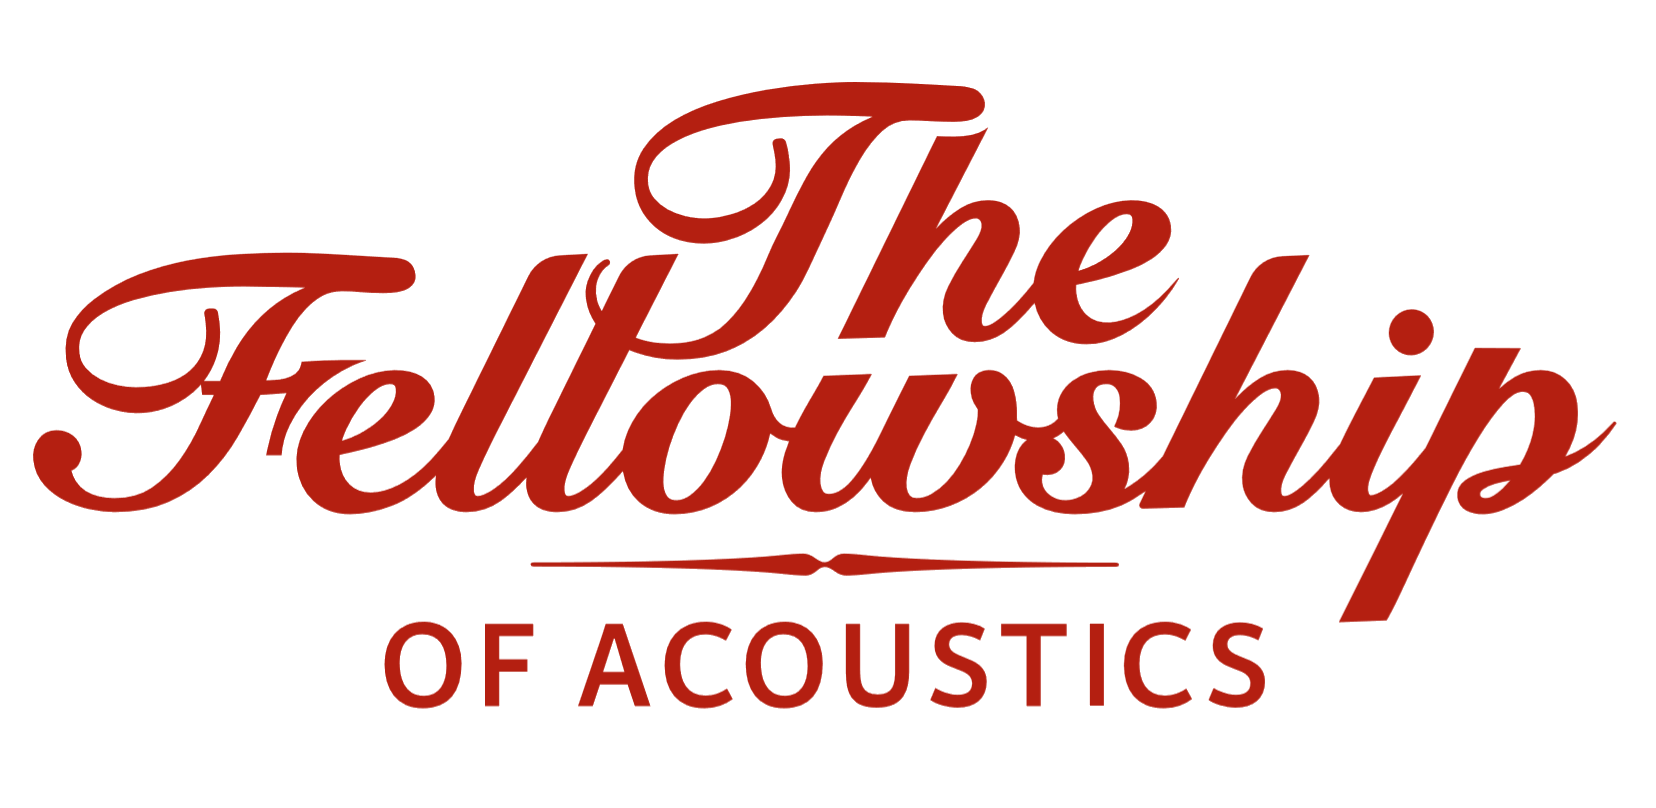 The  Fellowship of Acoustics